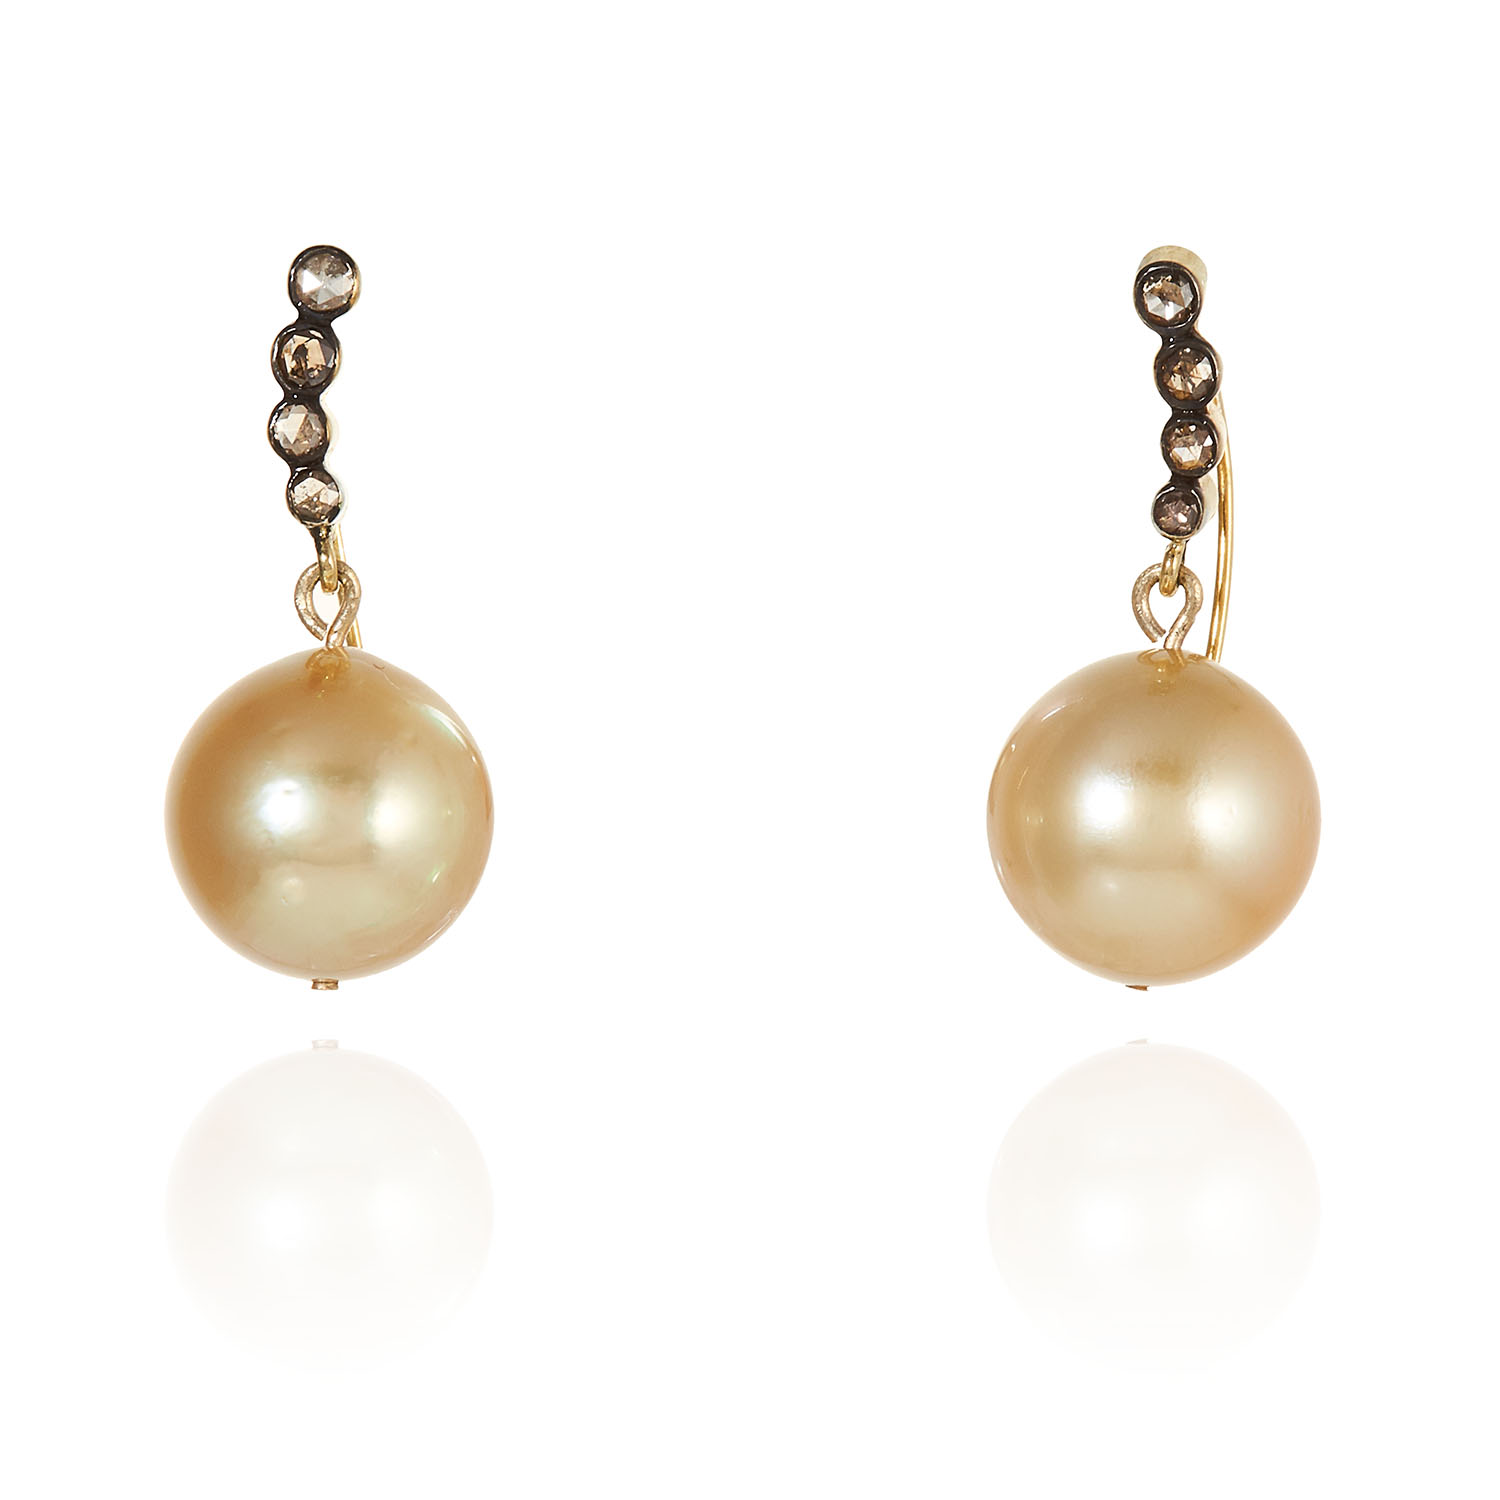 A PAIR OF PEARL AND DIAMOND EARRINGS suspending 12.0mm golden pearls below graduated diamond